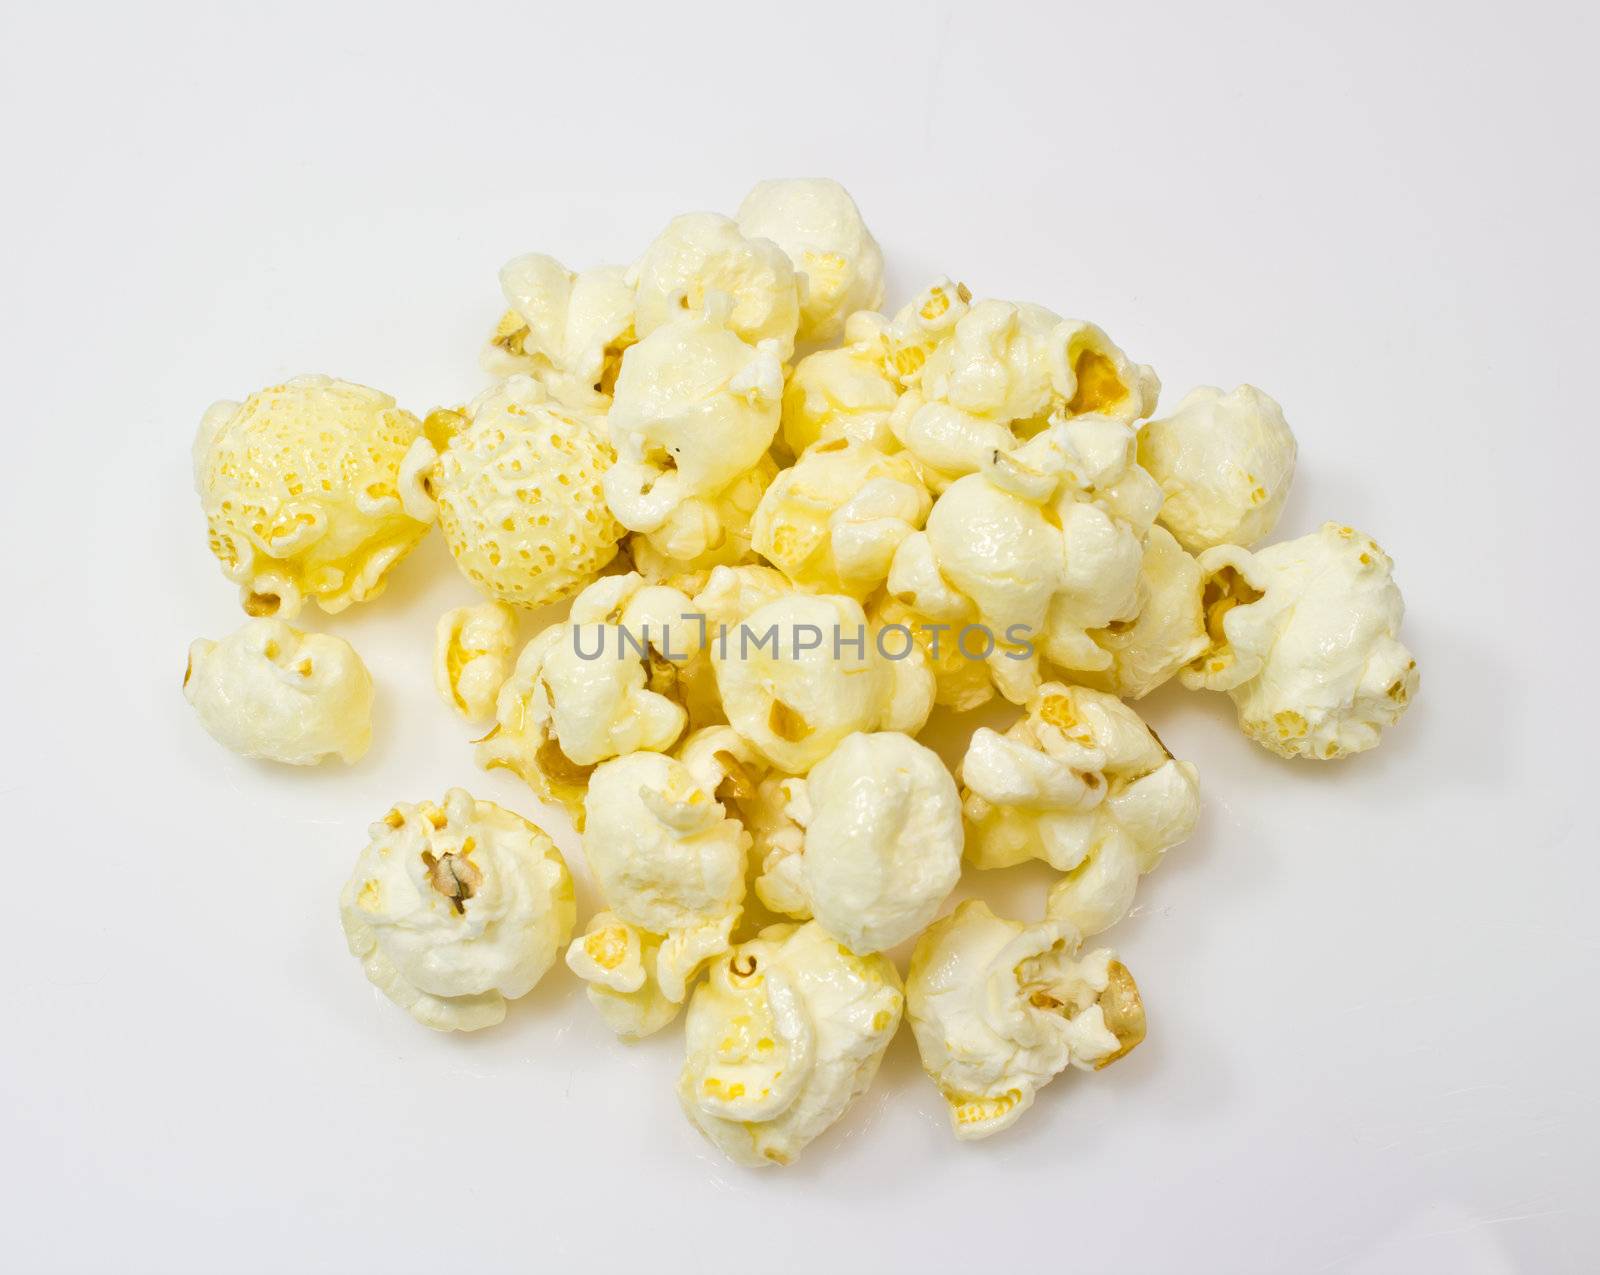 caramel candy popcorn on a white background